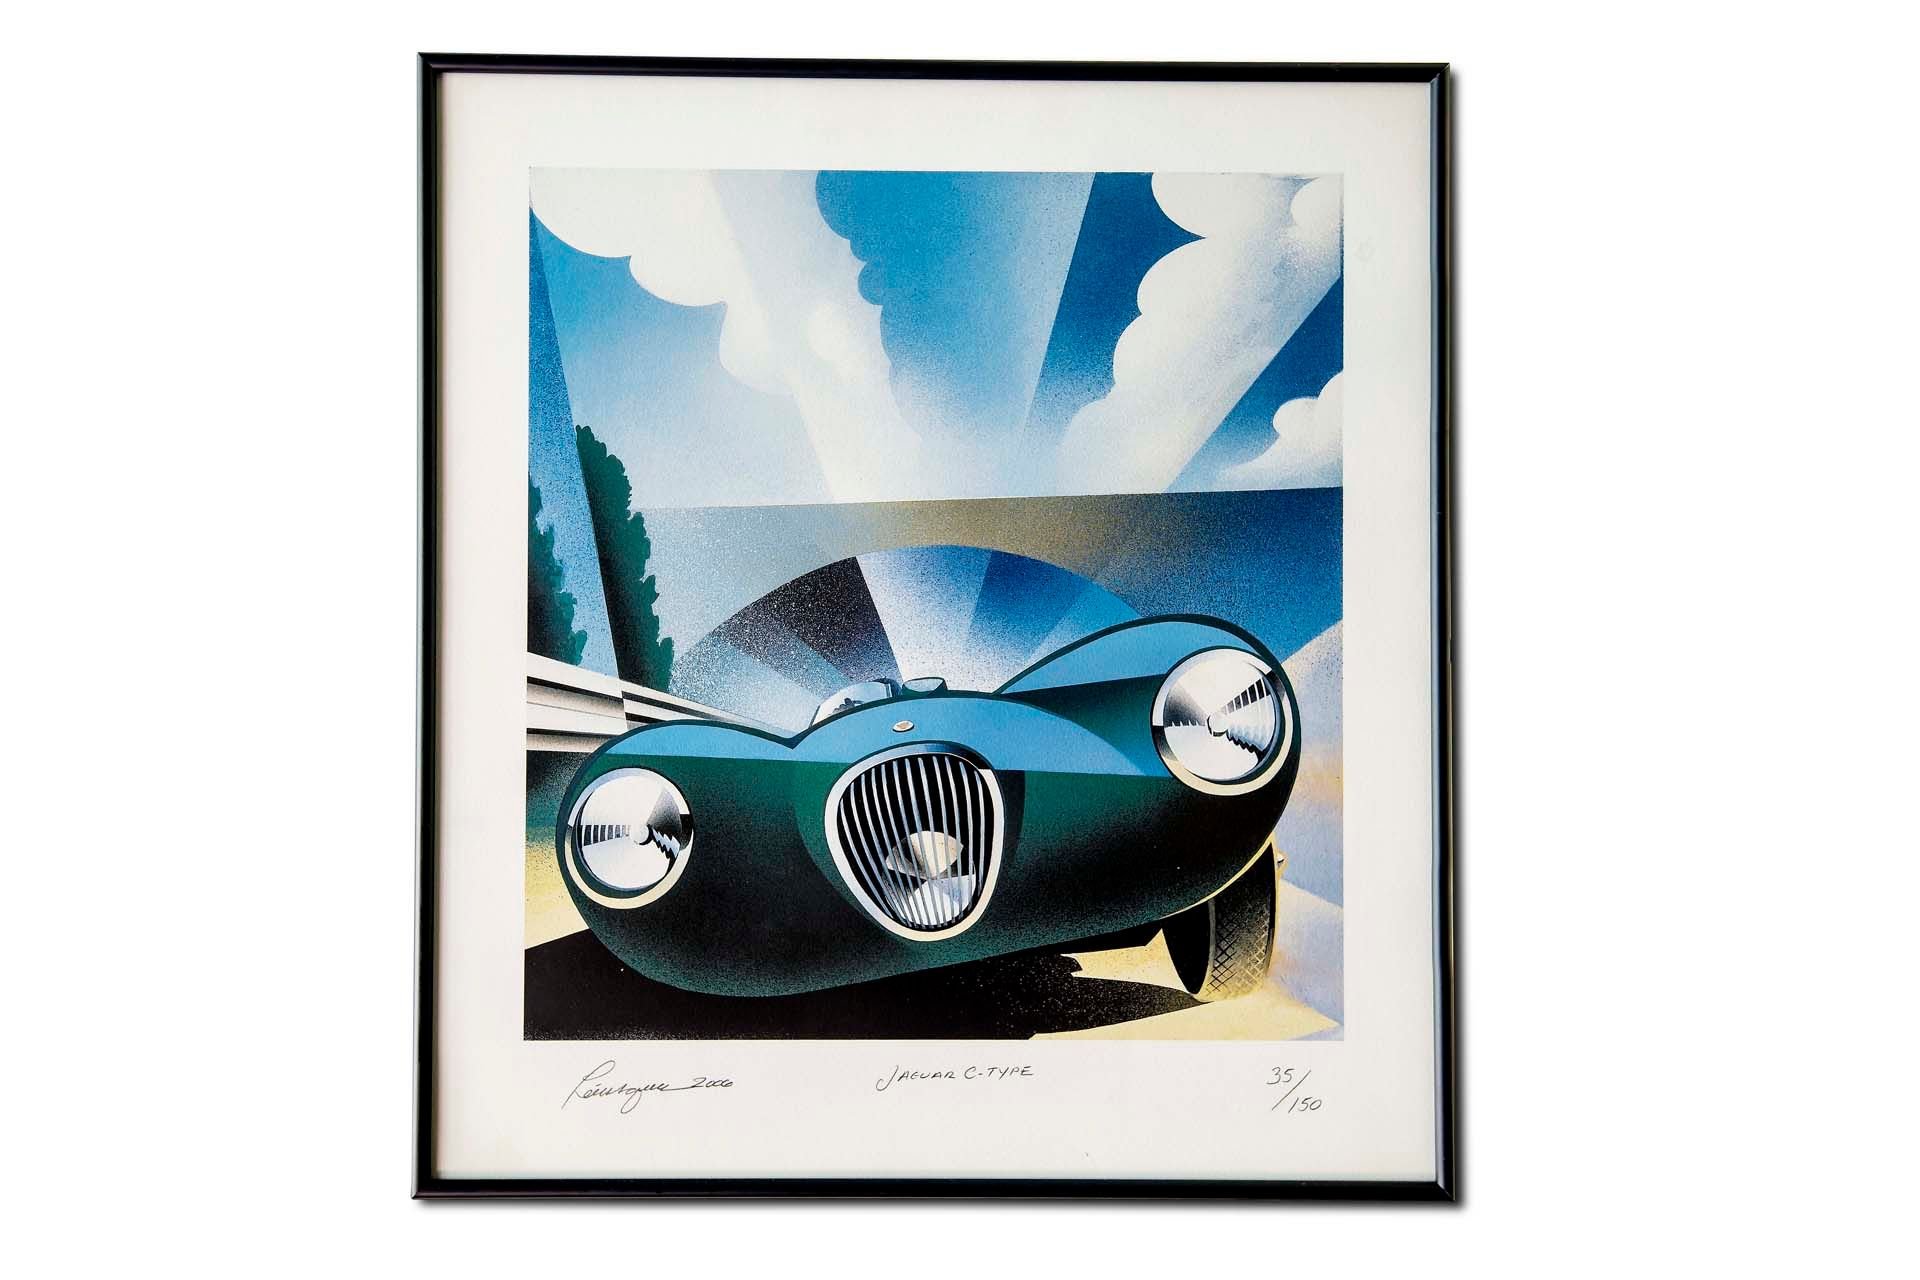 For Sale Framed 'Jaguar C-Type' Limited Edition Lithograph 35/150